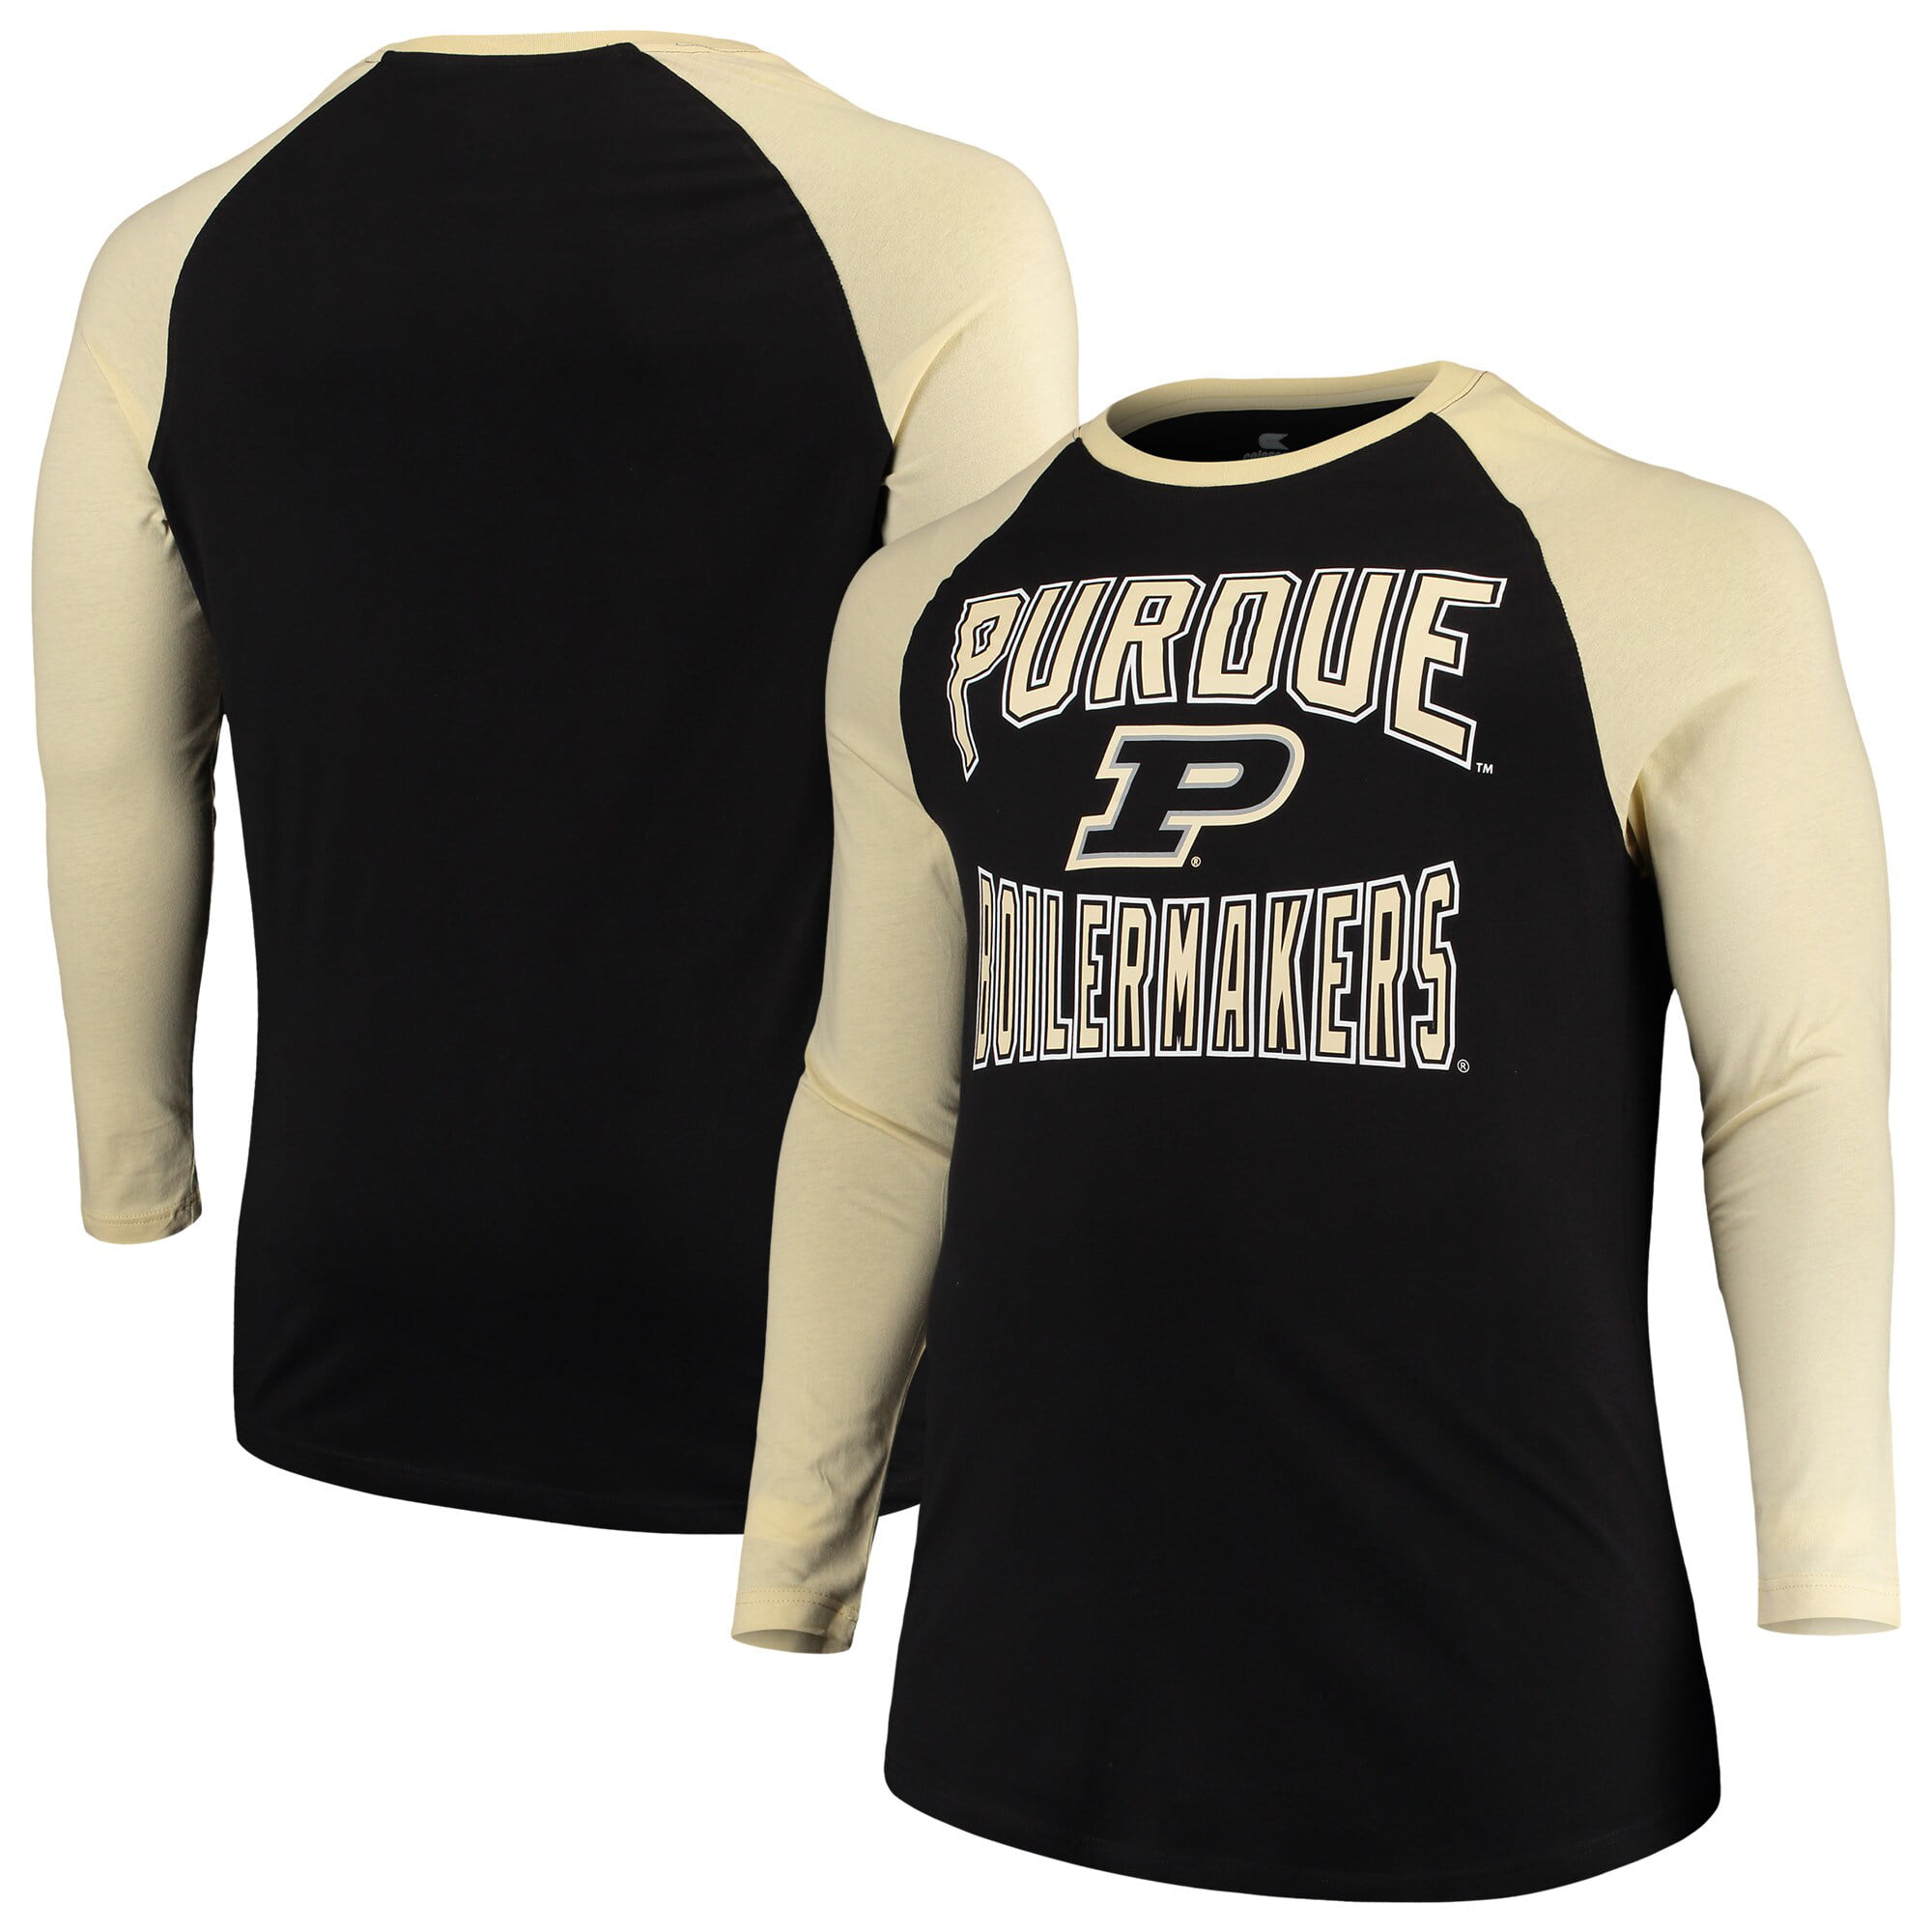 Purdue University T-Shirt w Flannel Sleeves